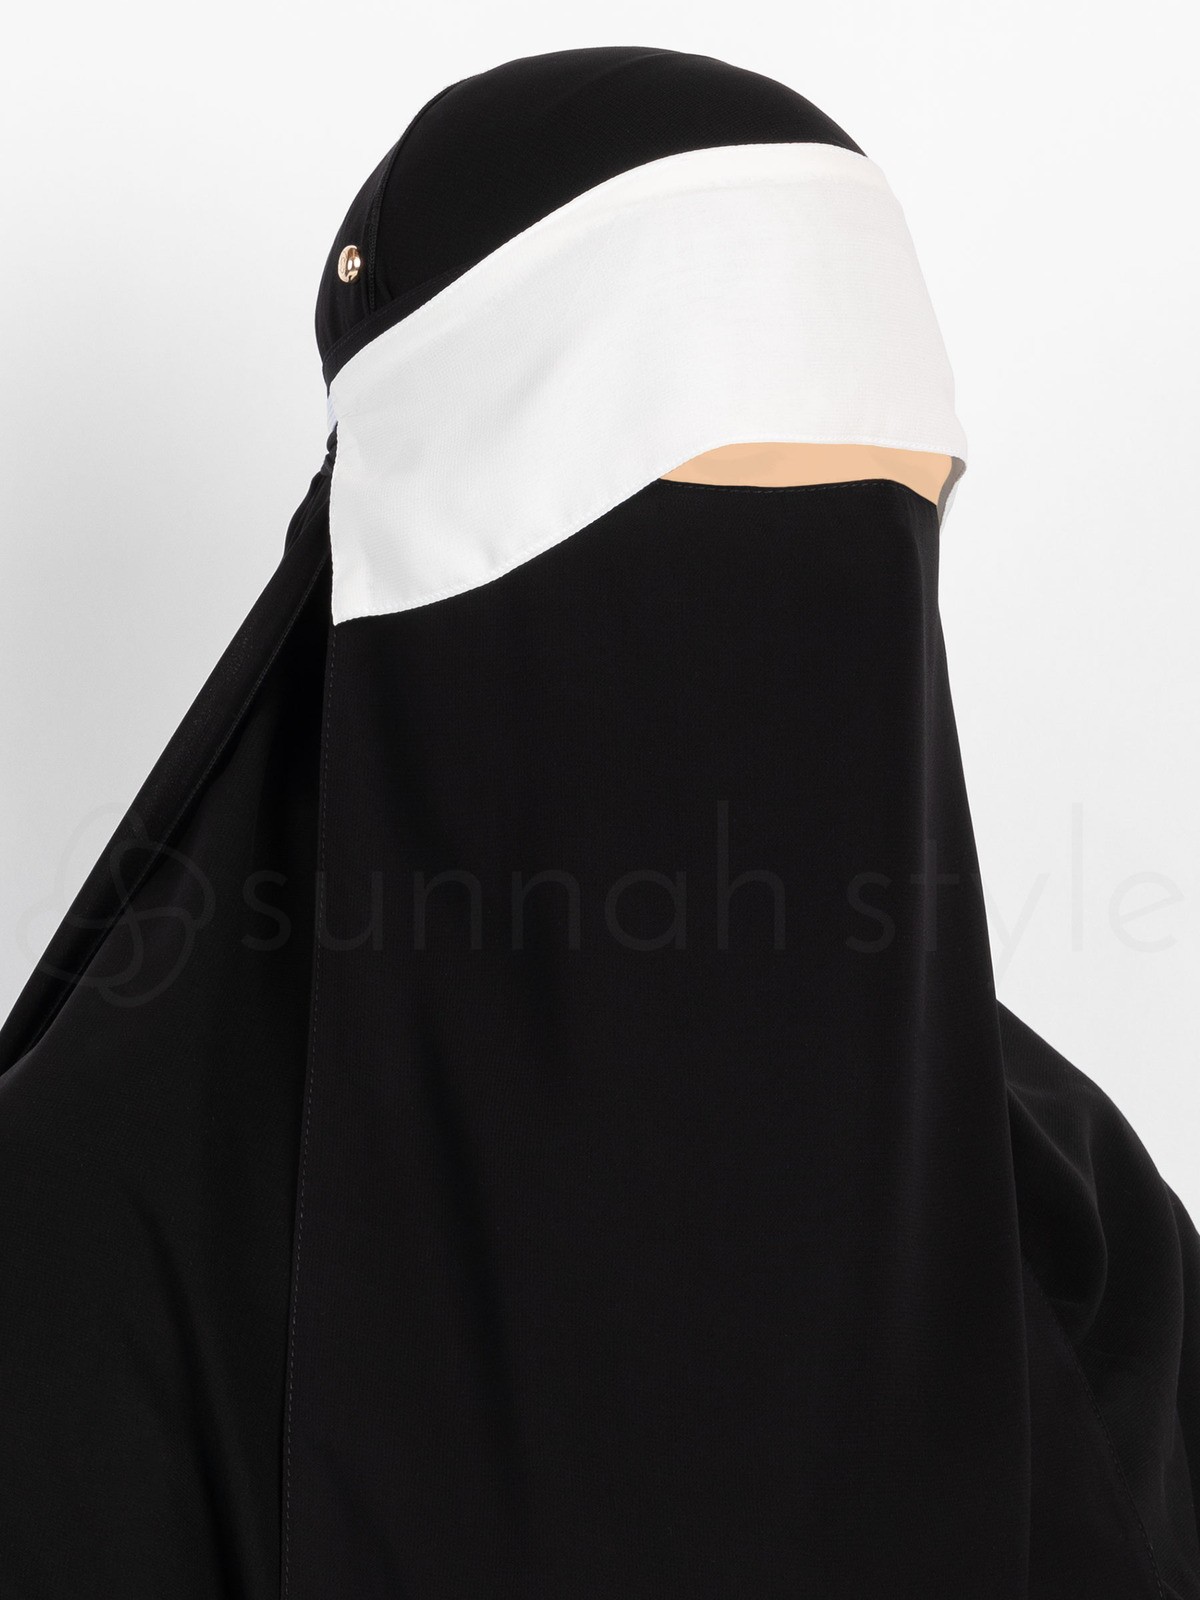 Sunnah Style - Adjustable Niqab Flap (White)